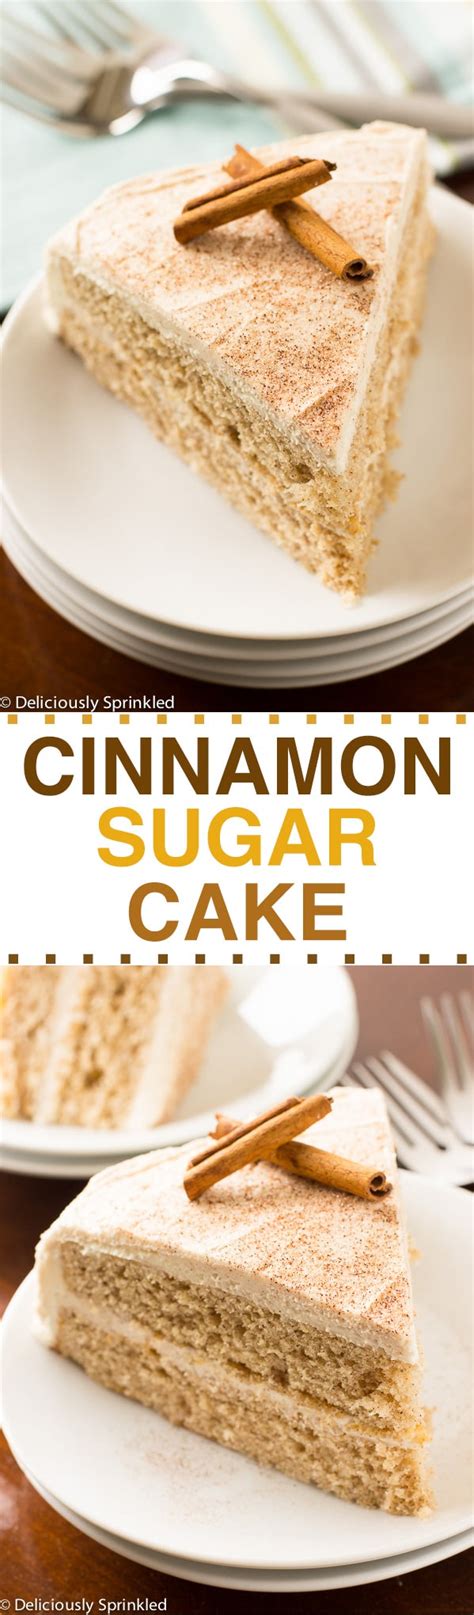 cinnamon-sugar-cake-deliciously-sprinkled image